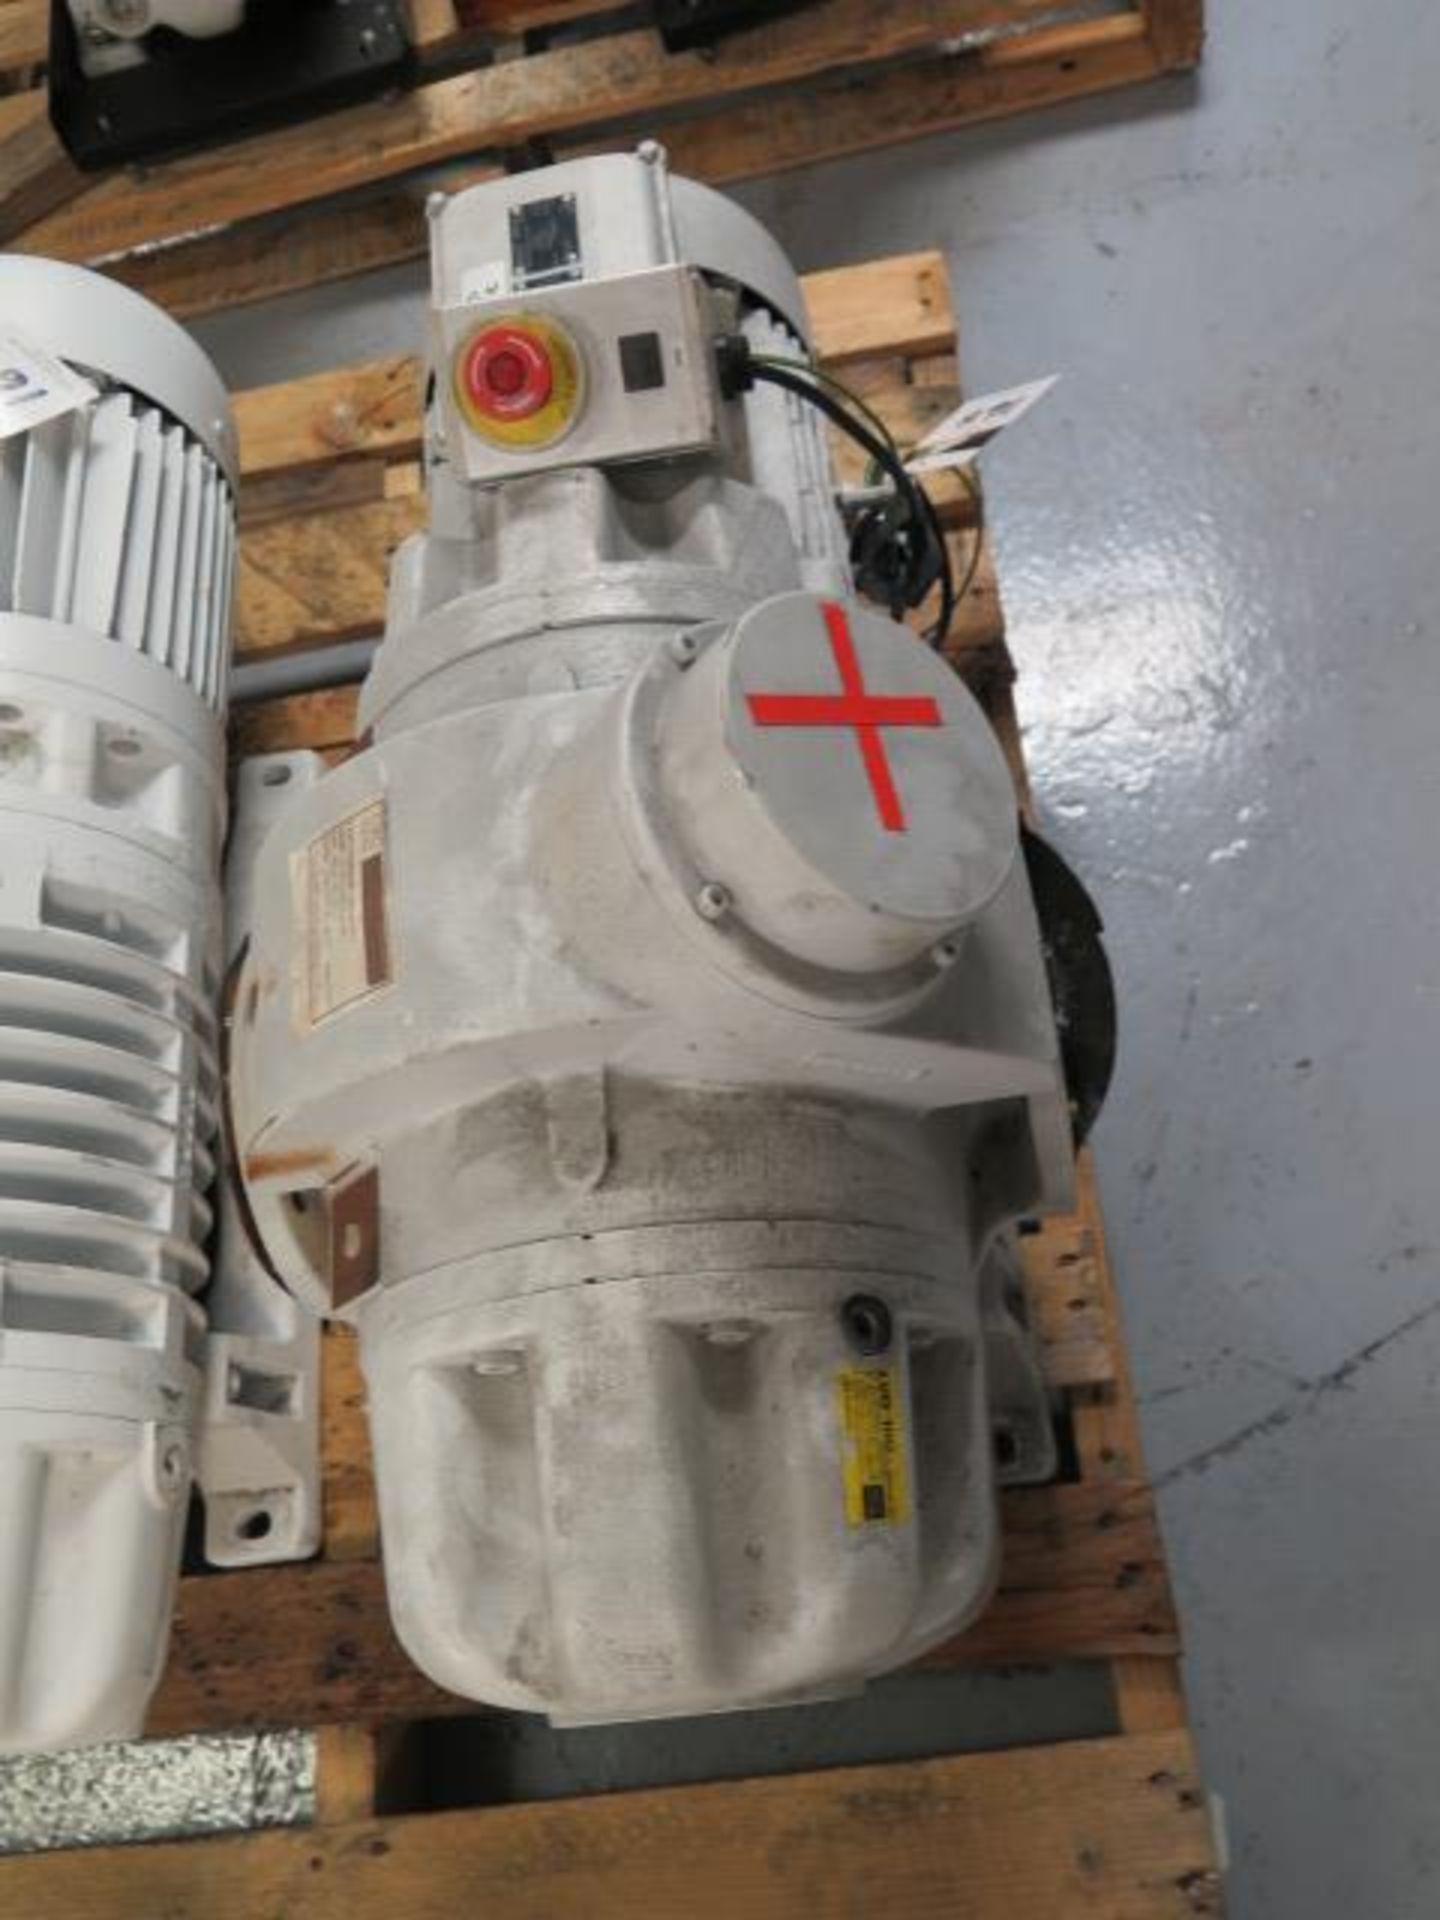 2011 Ruvac mdl. WSU 1001 3kW Vacuum Pump (SOLD AS-IS - NO WARRANTY) - Image 3 of 8